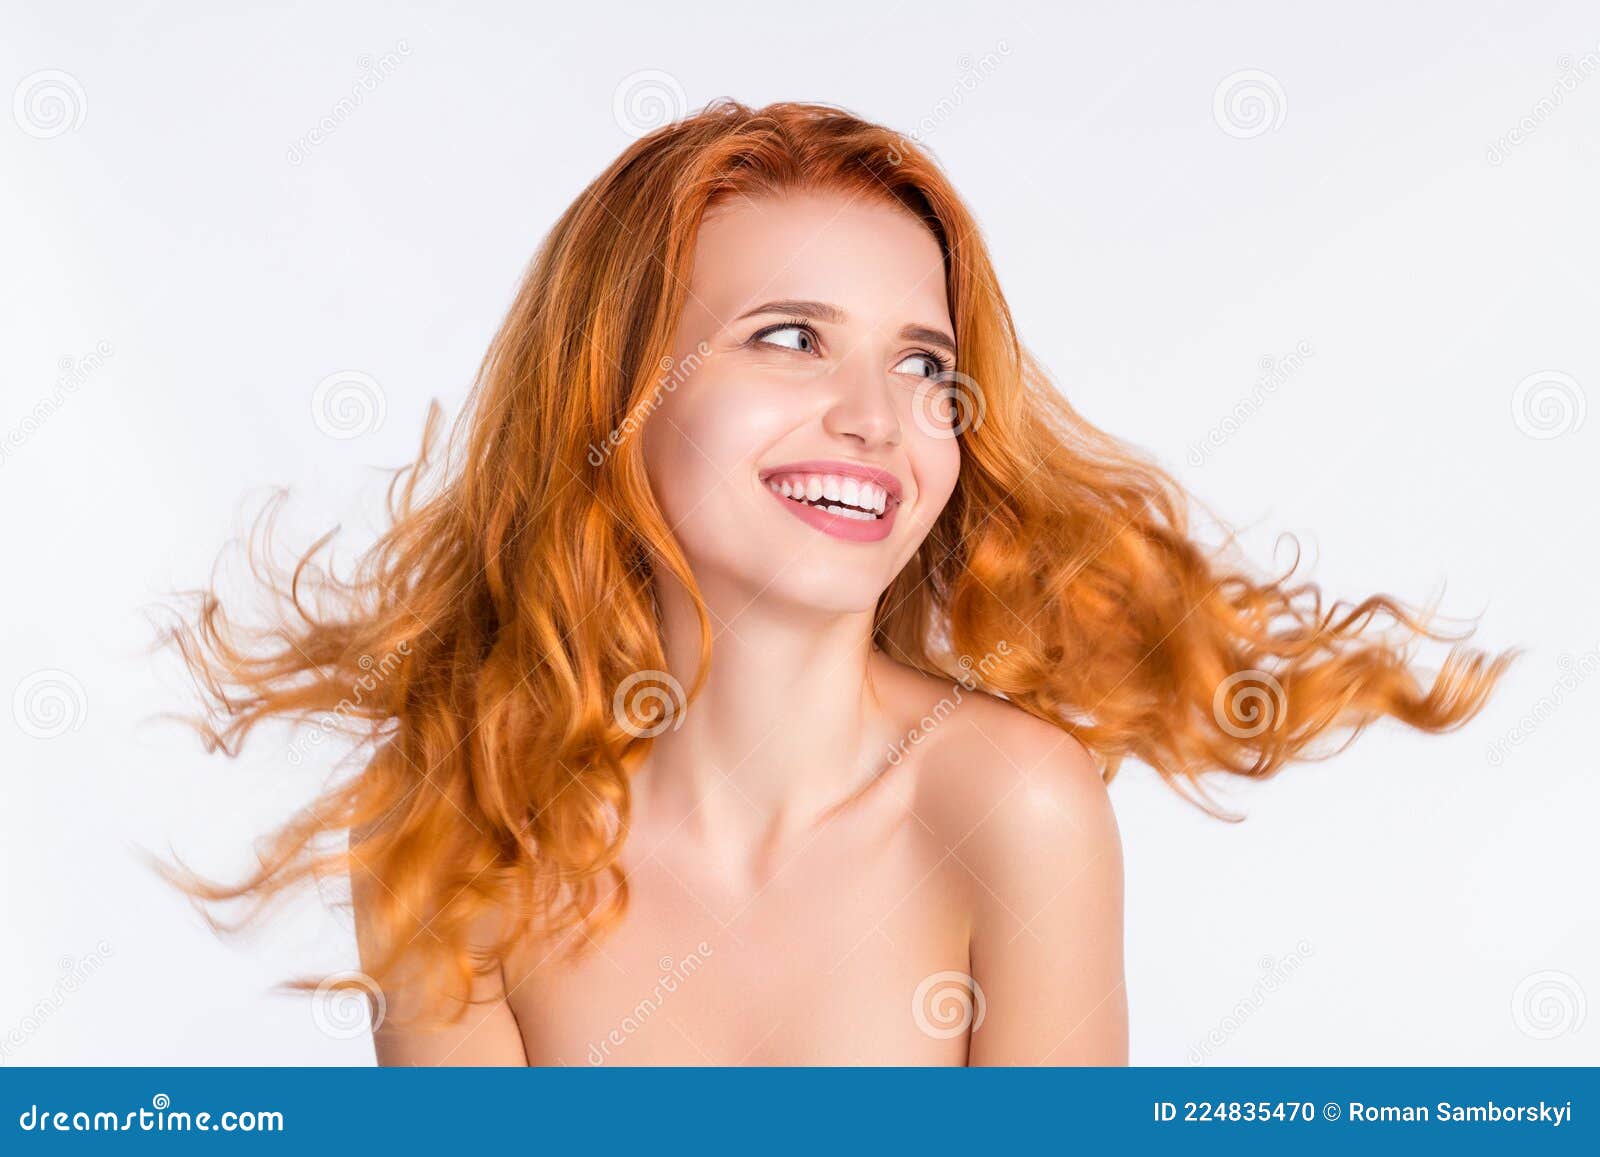 Sabrosa mujer cabello largo se desnuda